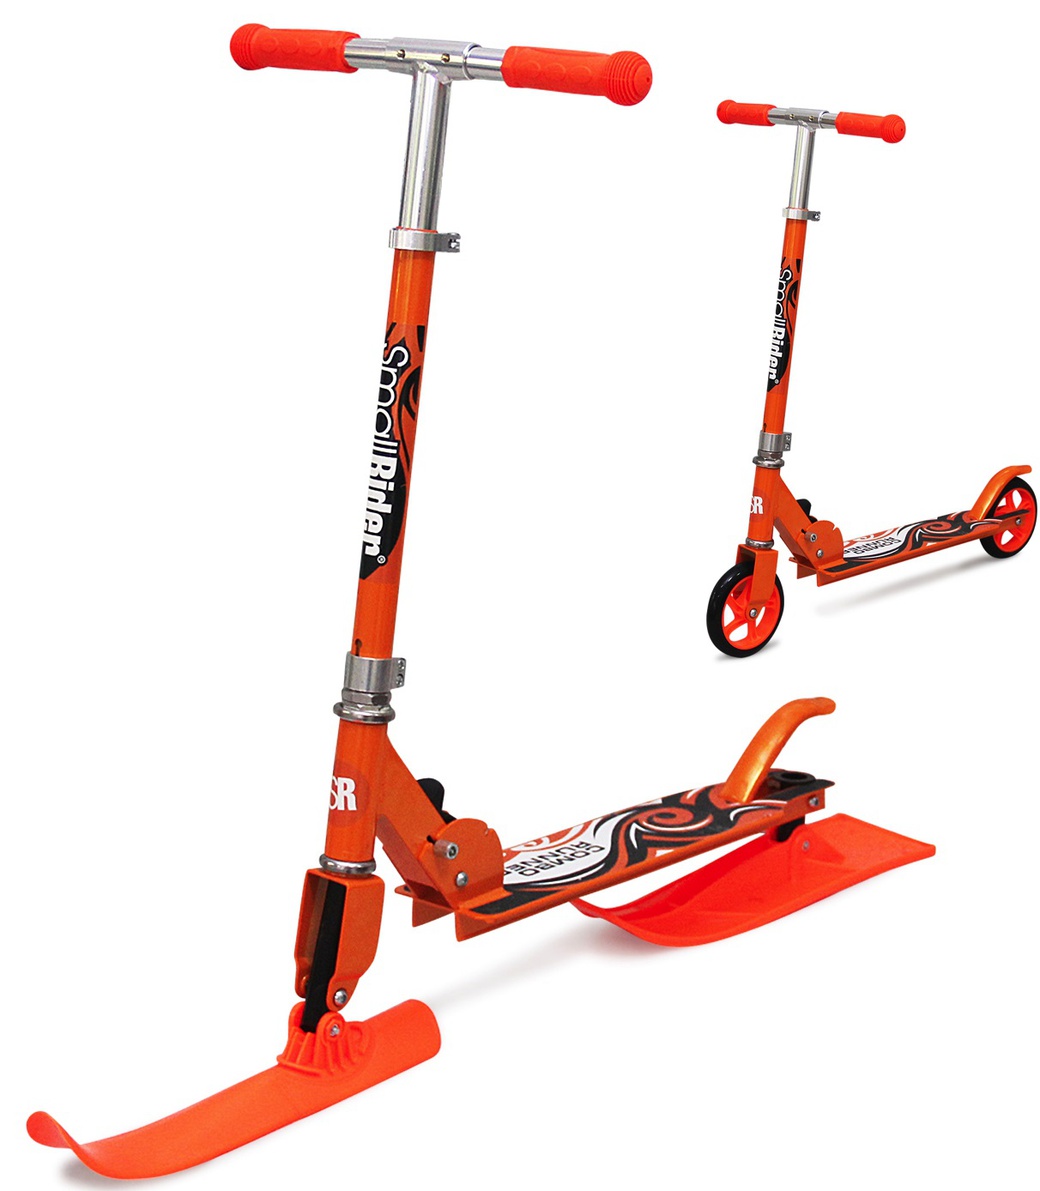 Small Rider Combo Runner 145 (оранжевый) - Самокат-снегокат с лыжами и колесами фото